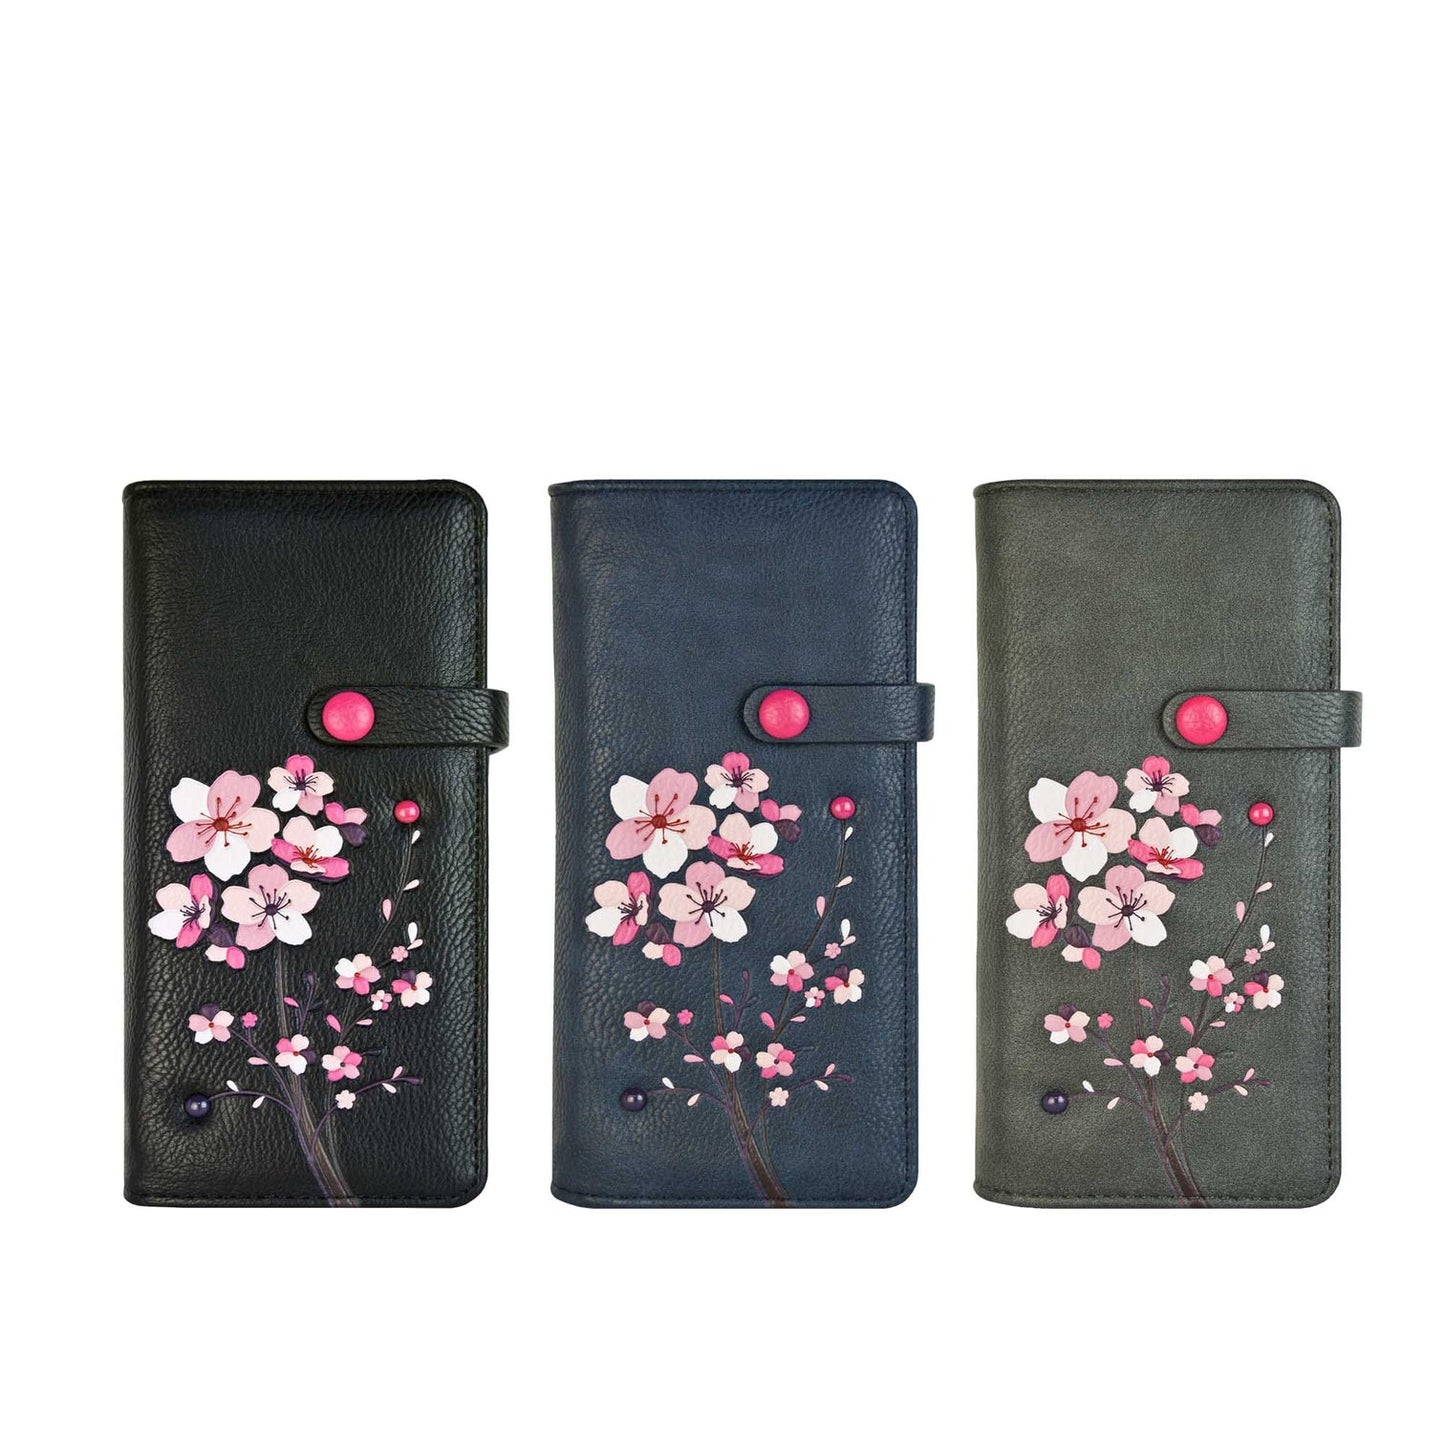 ESPE Gemma Vegan Leather Long Wallet with Cherry Blossom Appliqué